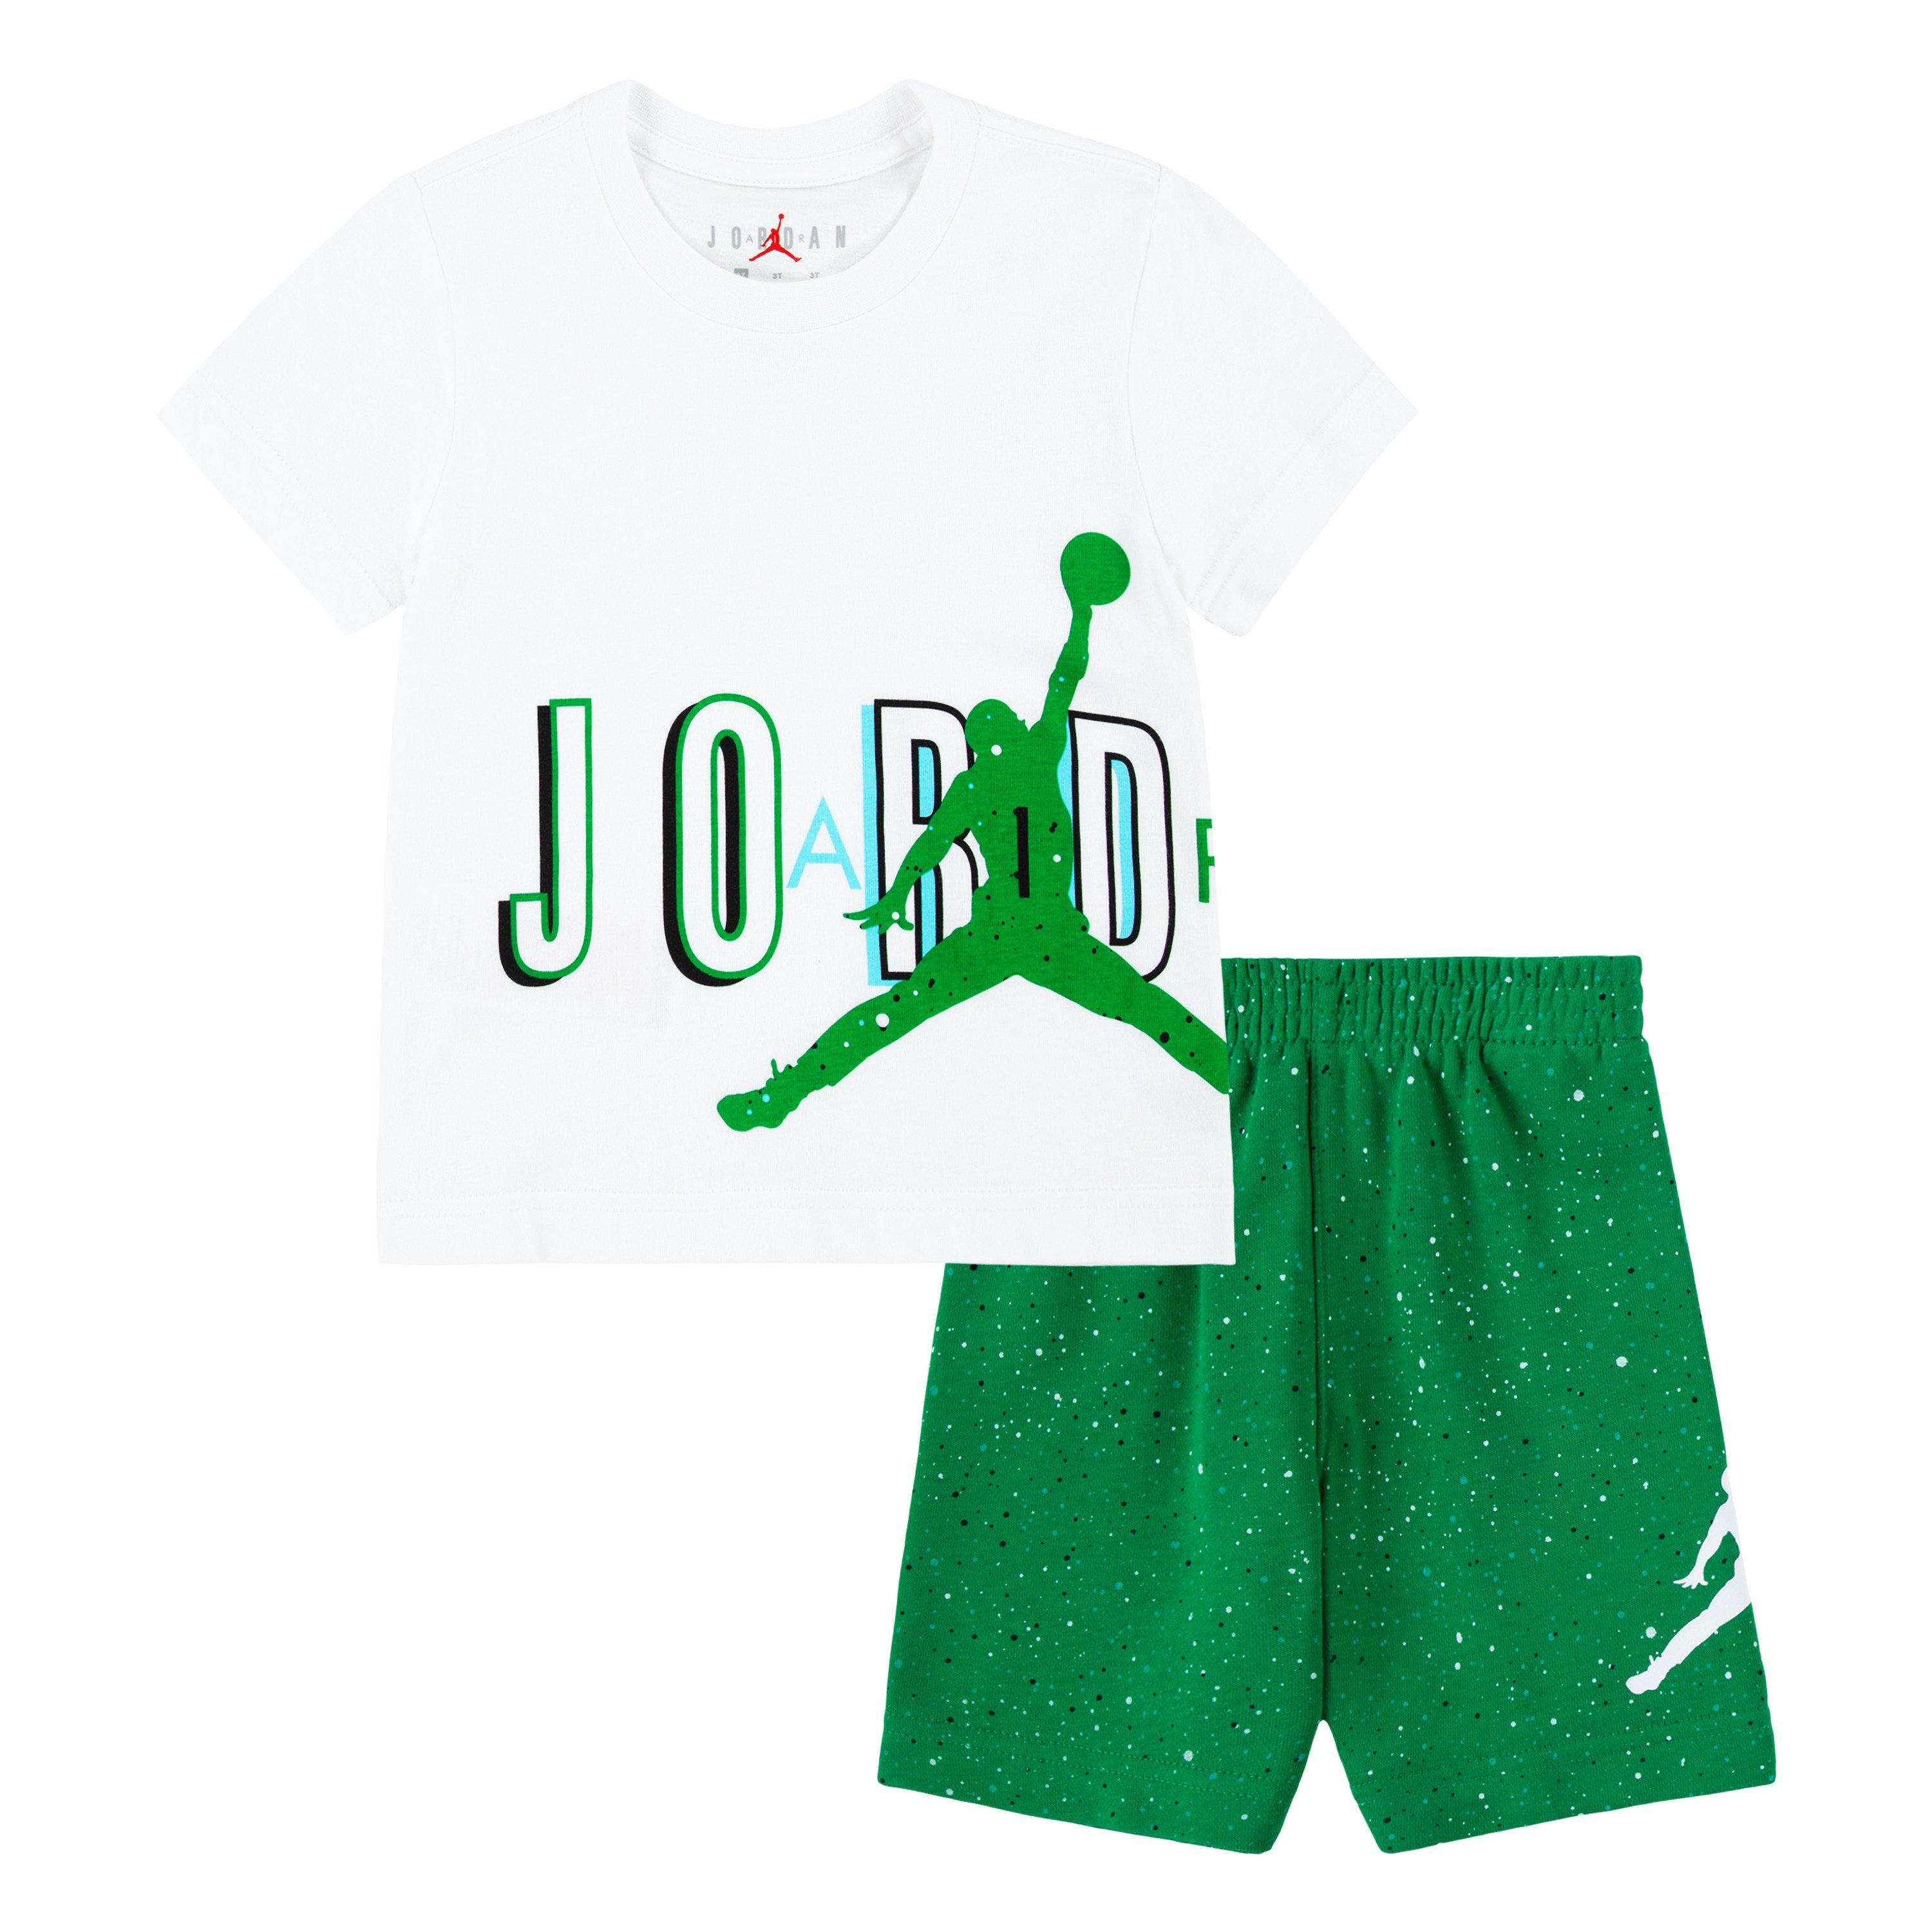 Jordan Boys' Jumpman Woven Play Shorts, Large, Lucky Green